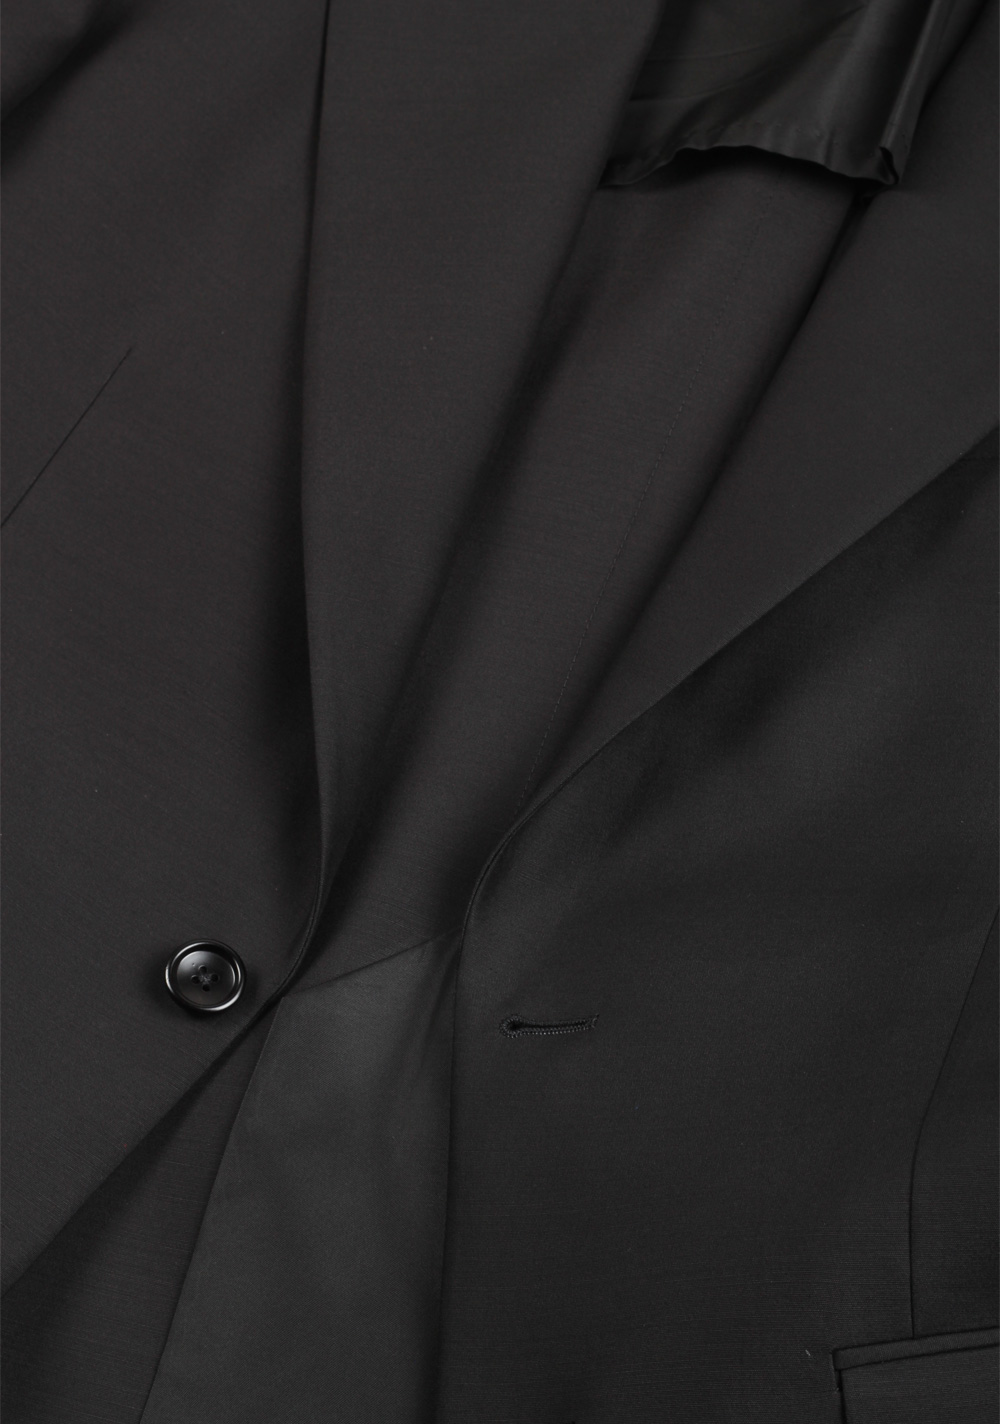 TOM FORD New Spencer Solid Black Suit Size 46 / 36R U.S. | Costume Limité